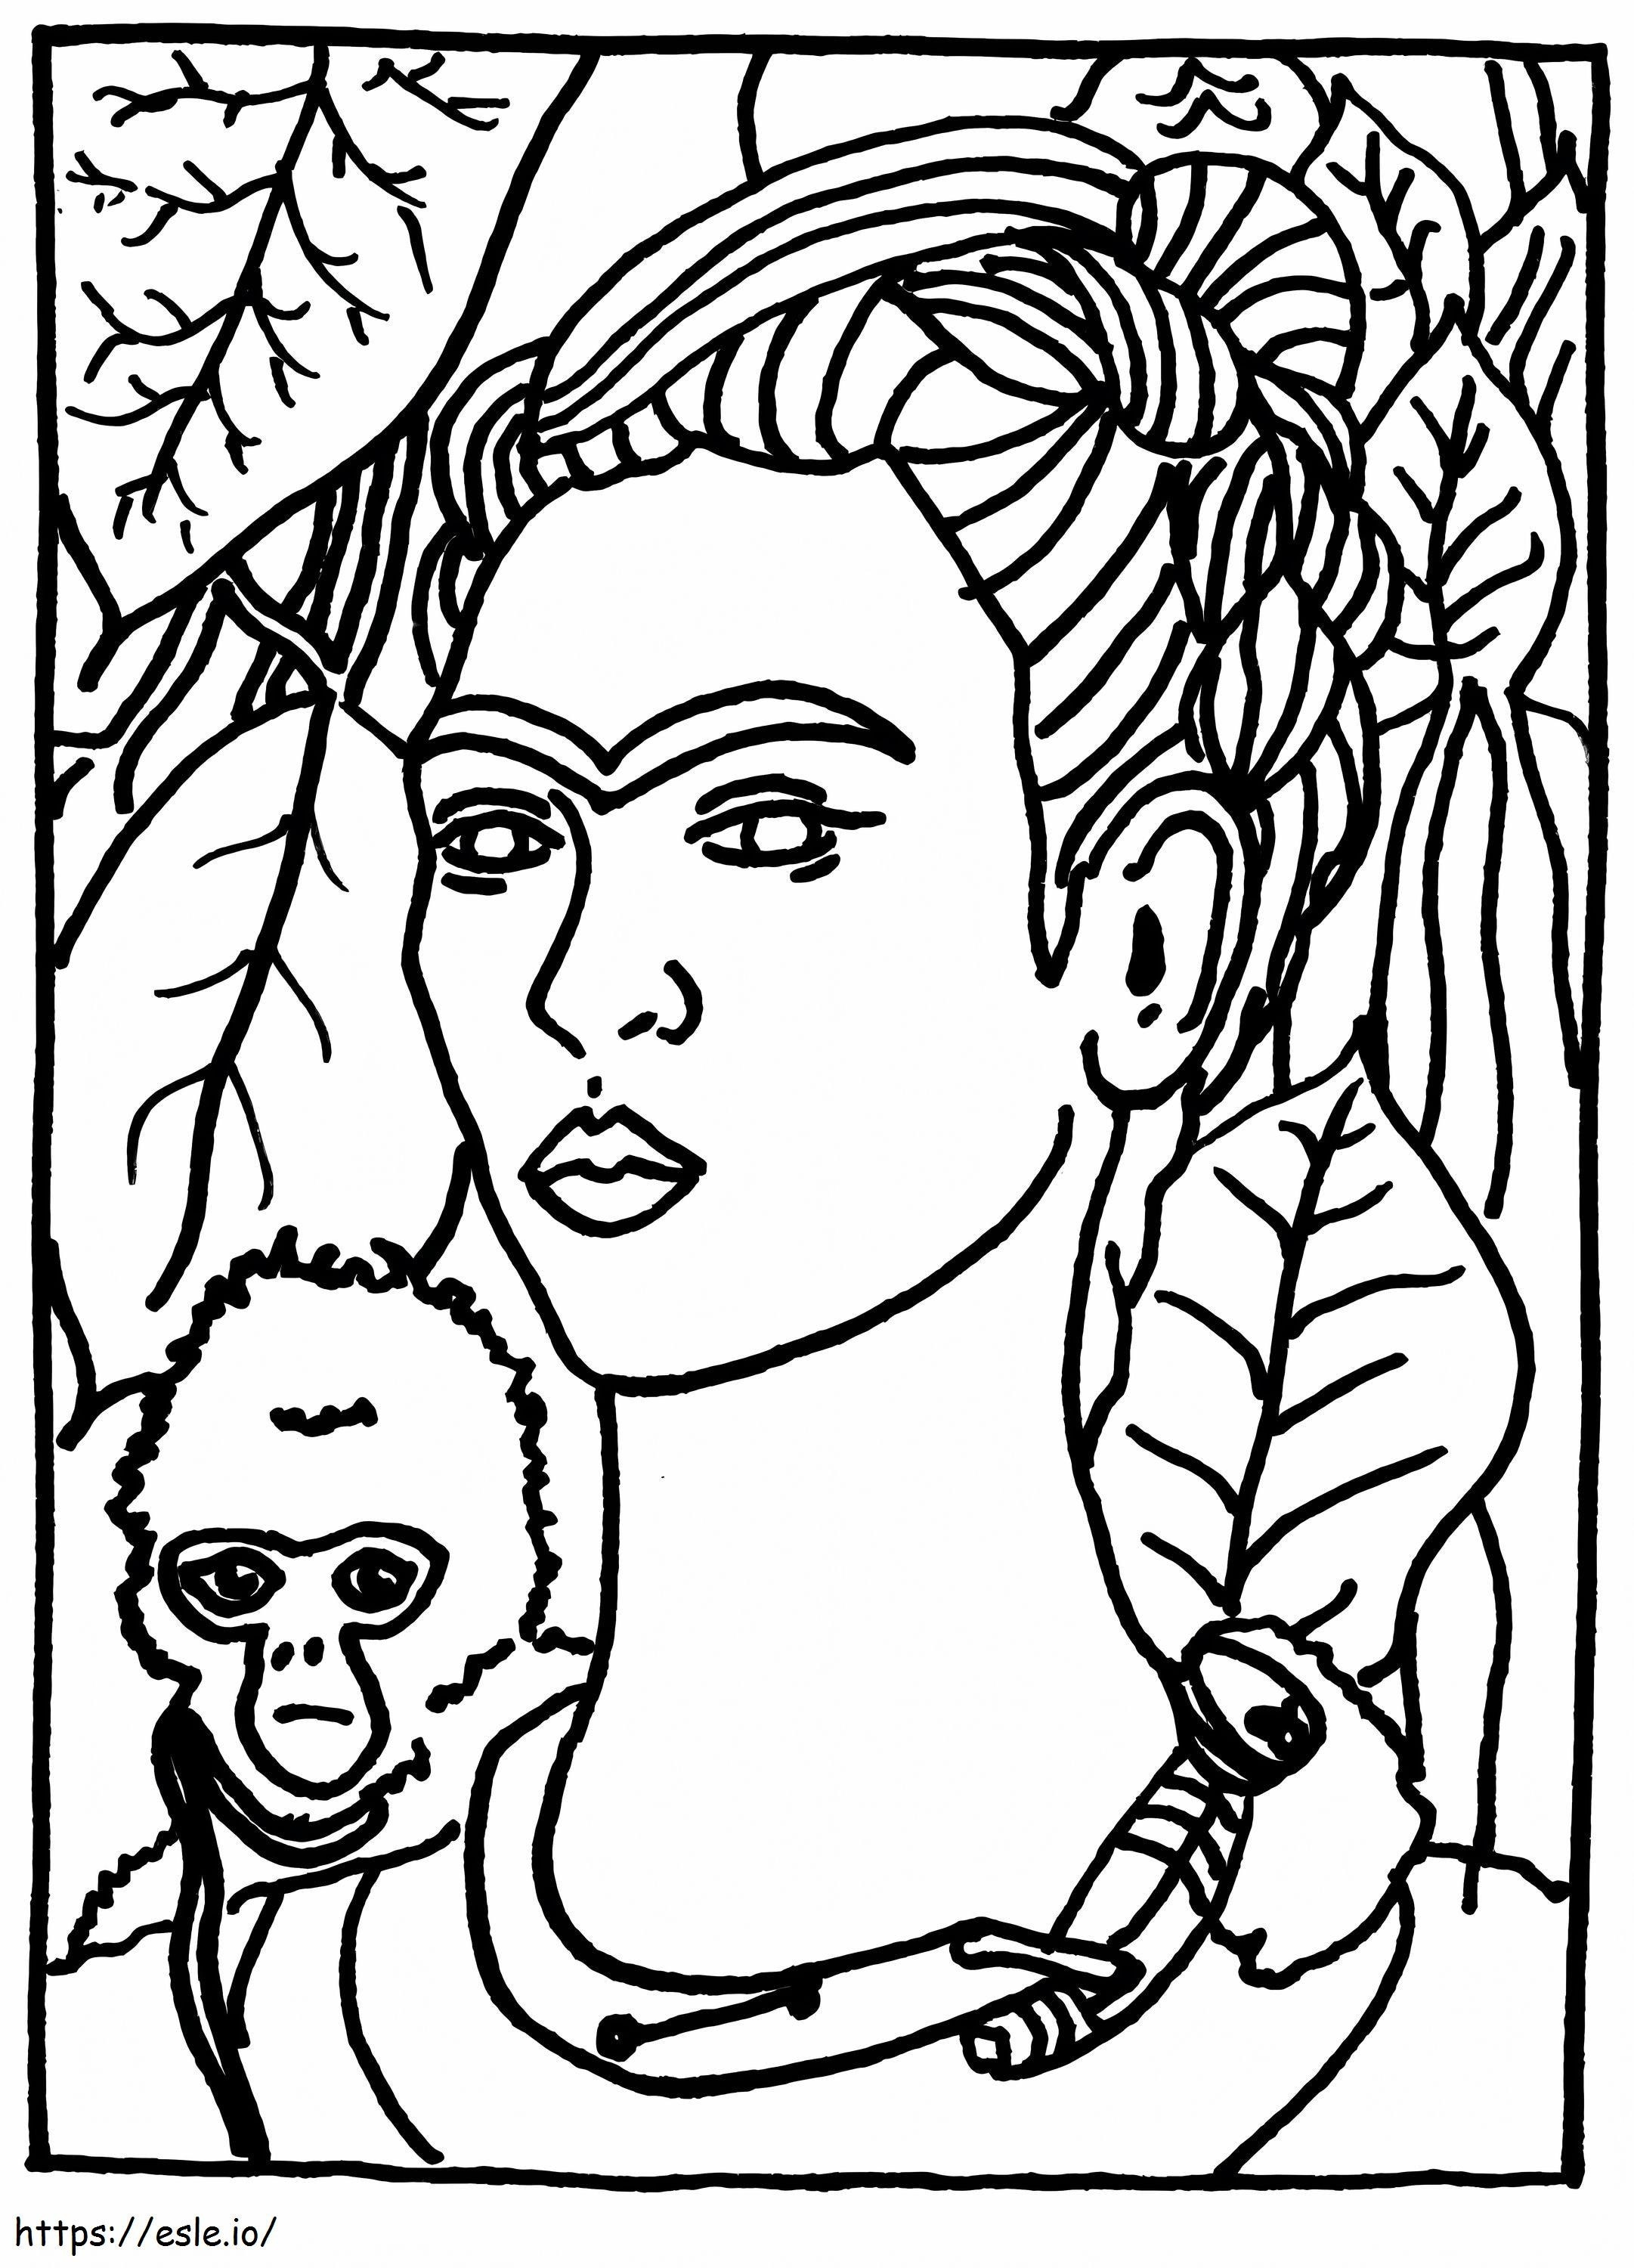 Frida Kahlo'ya özgür boyama